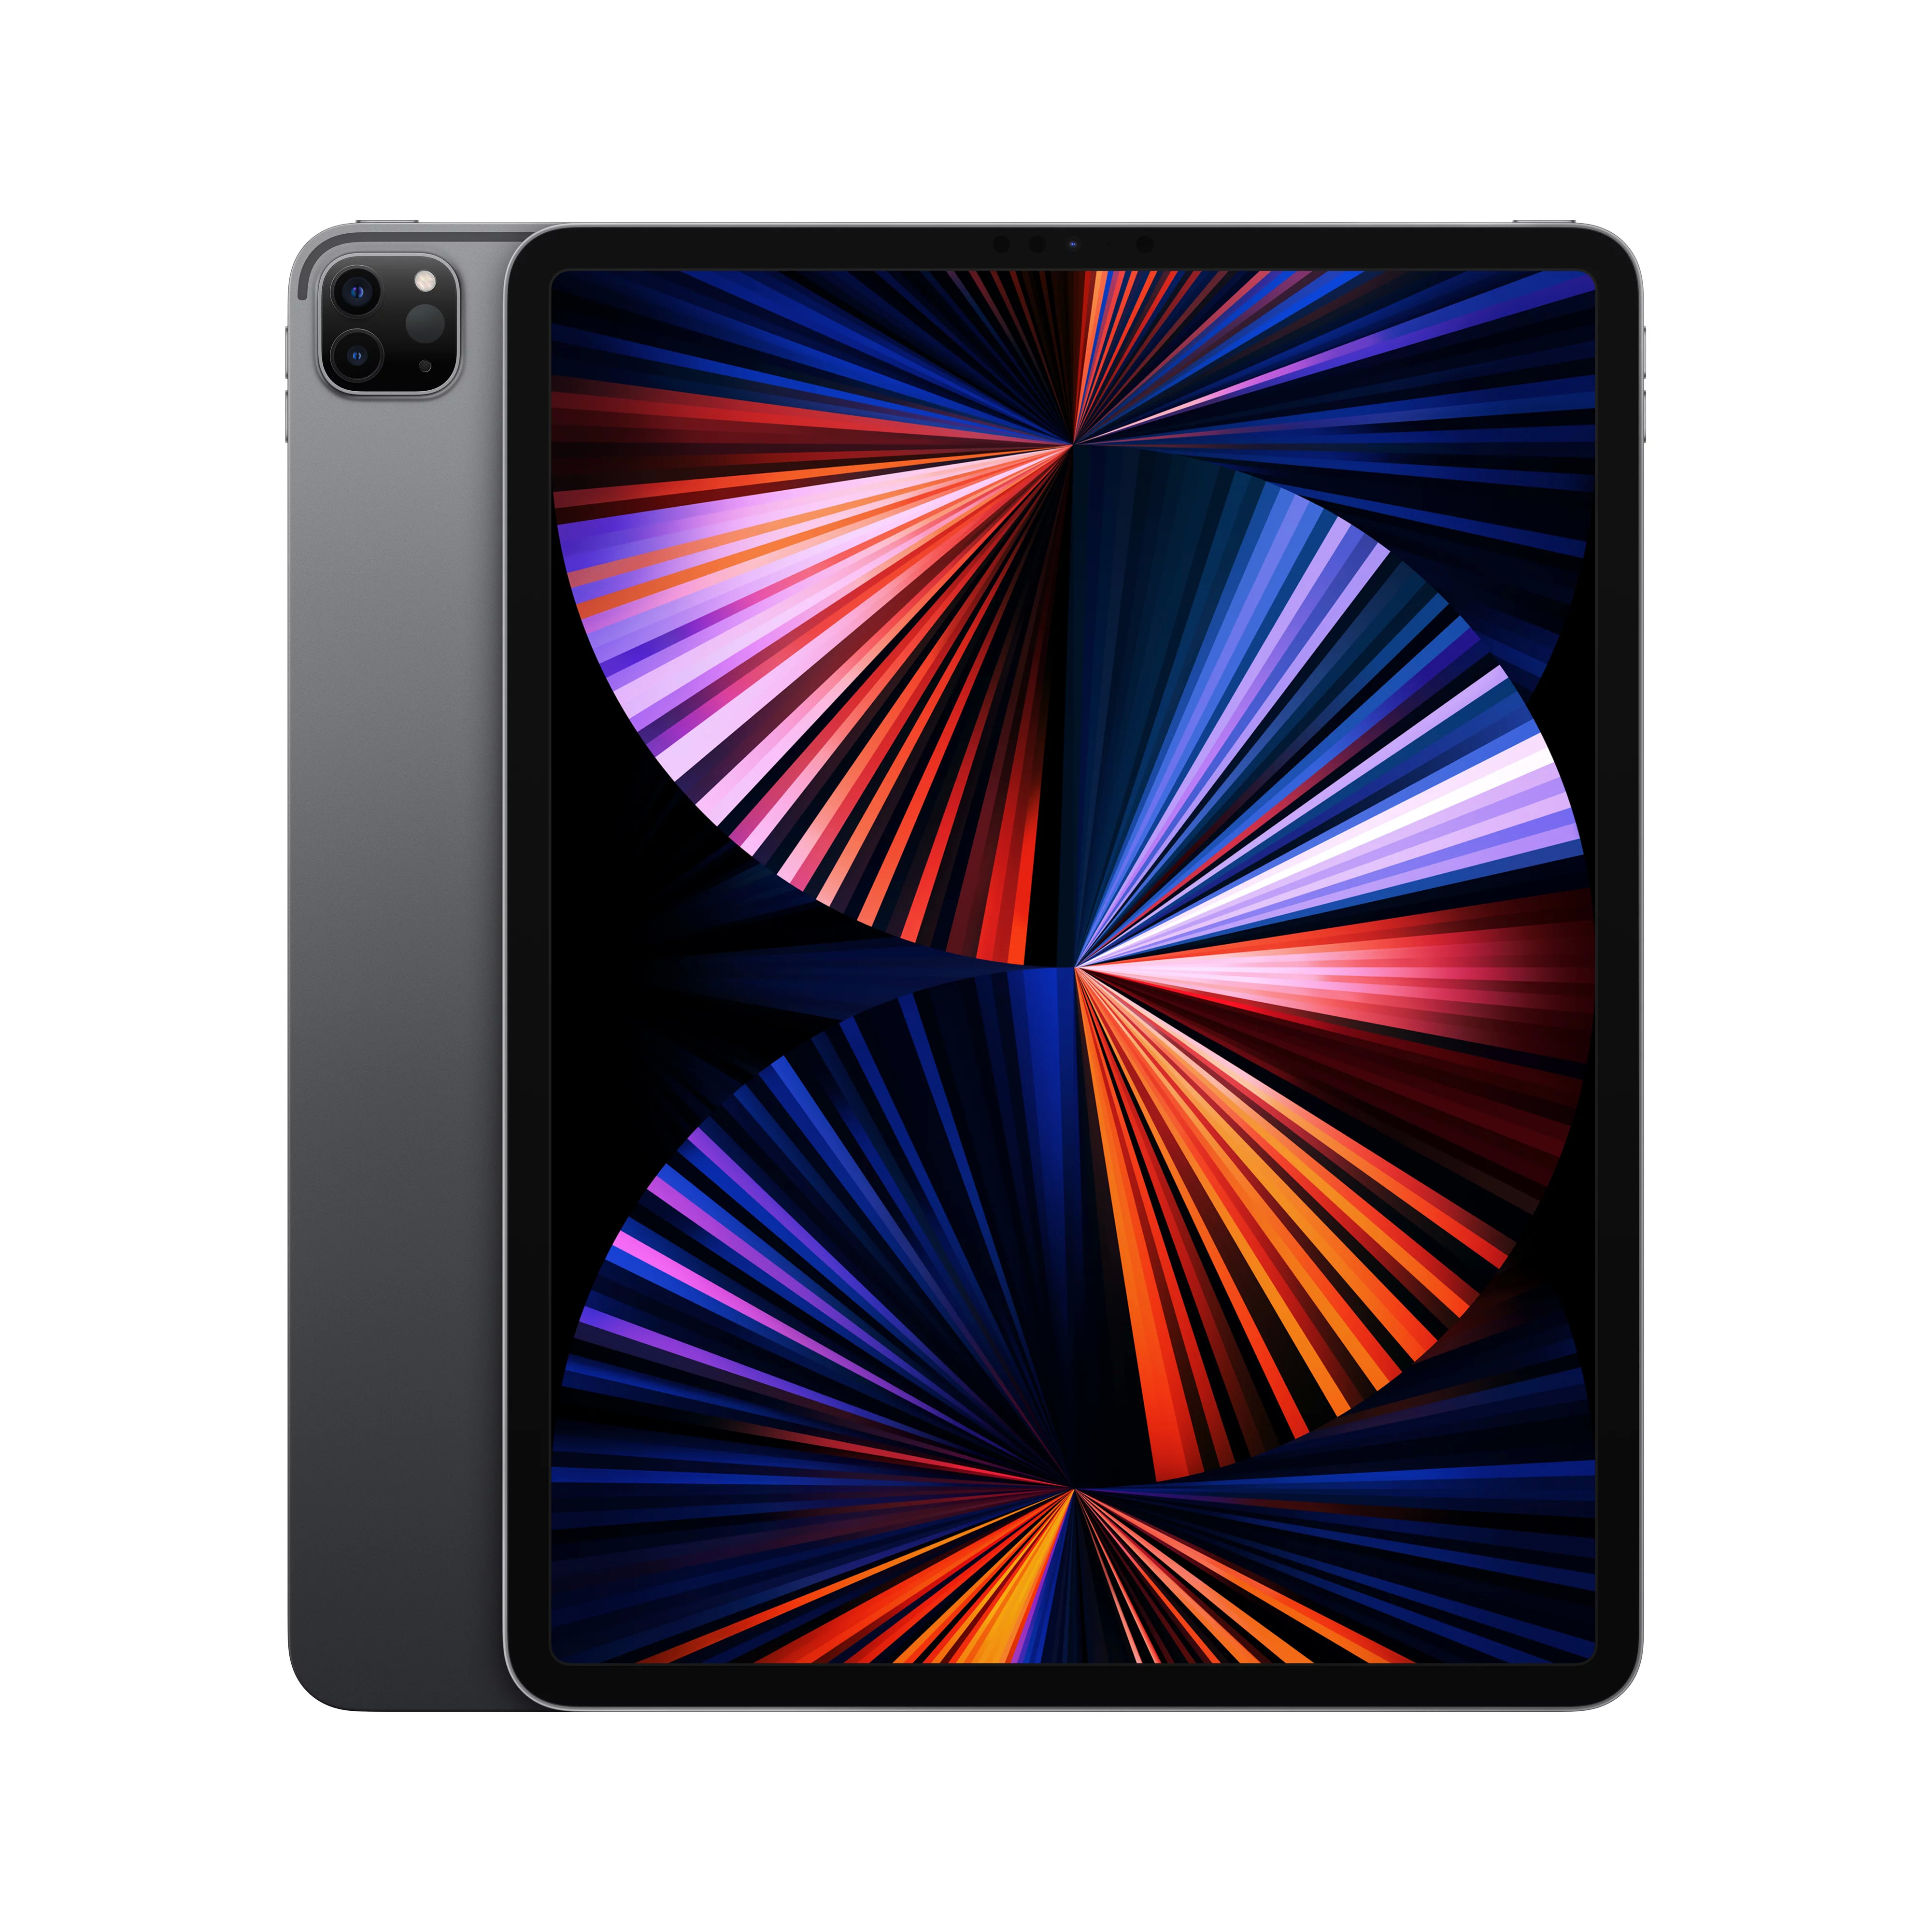 2021 Apple 12.9-inch iPad Pro Wi-Fi 128GB - Space Gray (5th Generation) $769